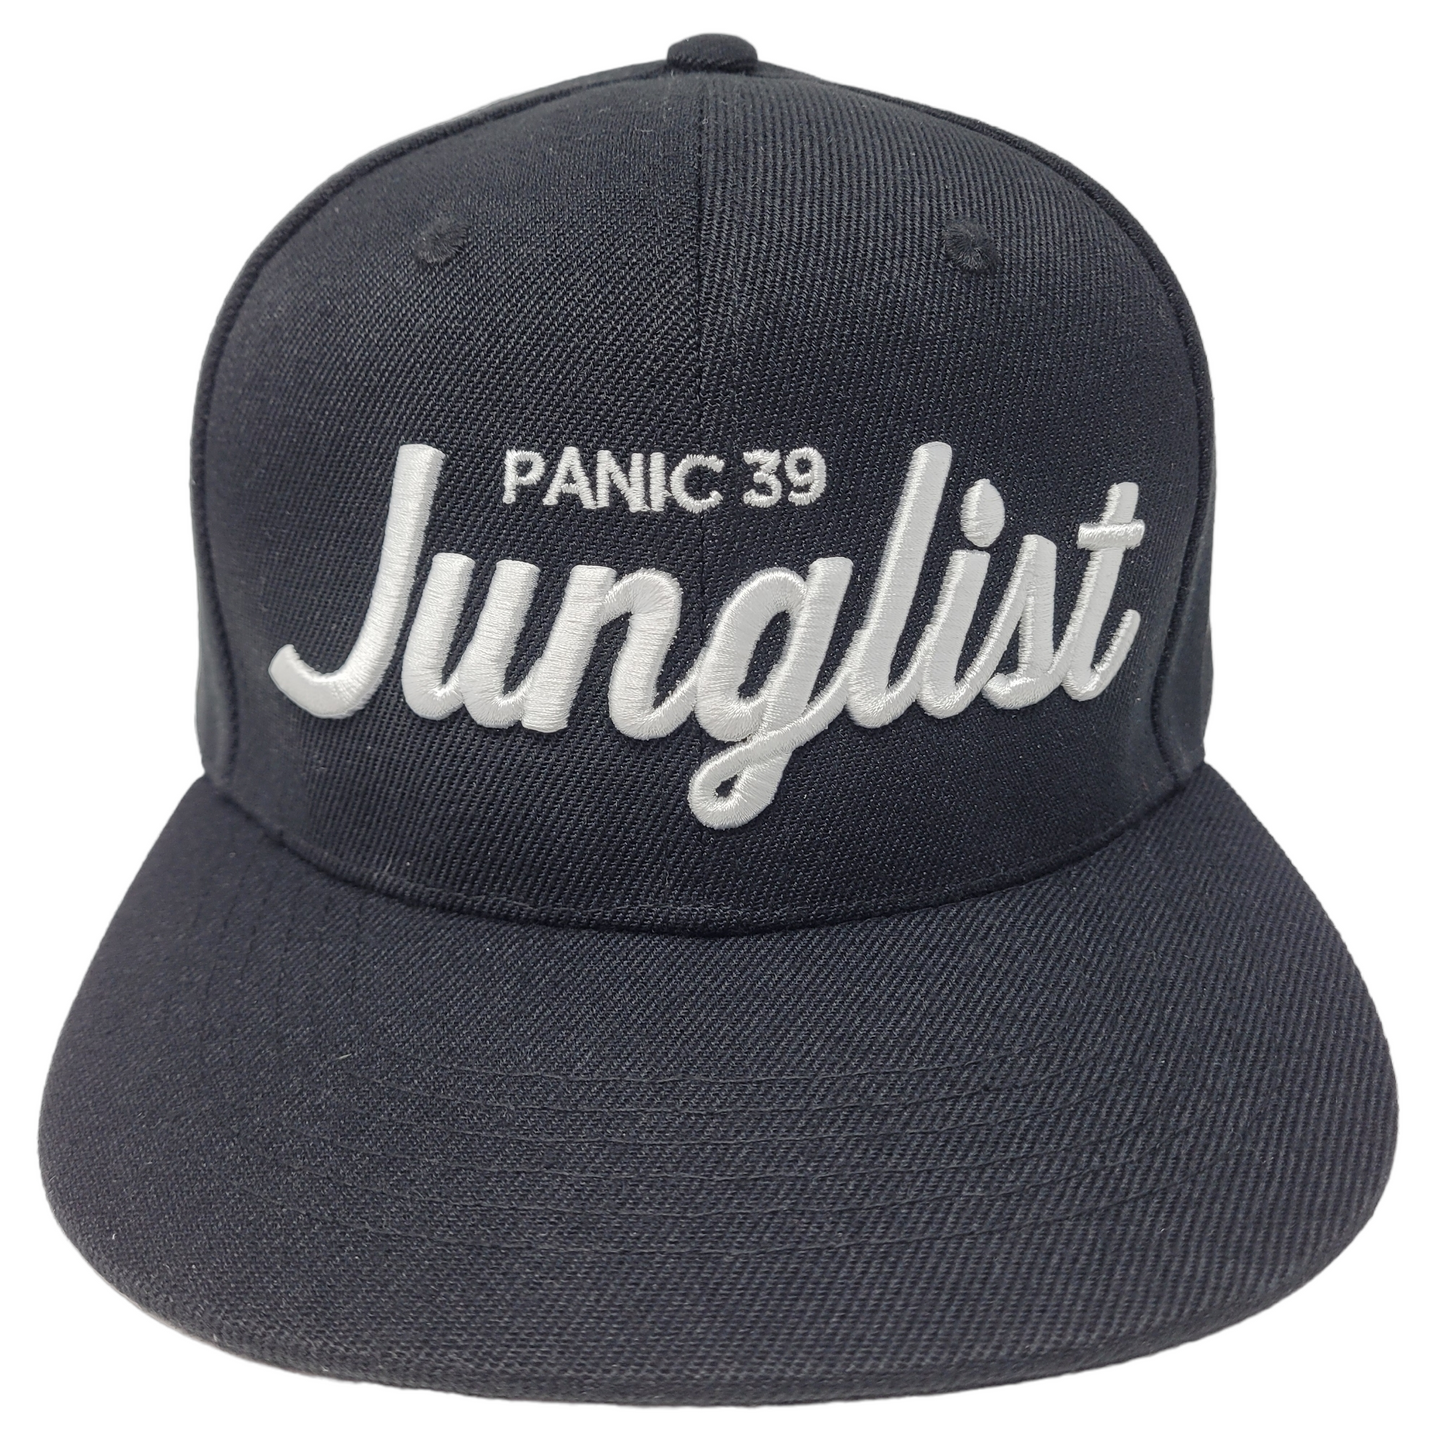 THE BLACK PANIC 39 JUNGLIST SNAPBACK BASEBALL HAT